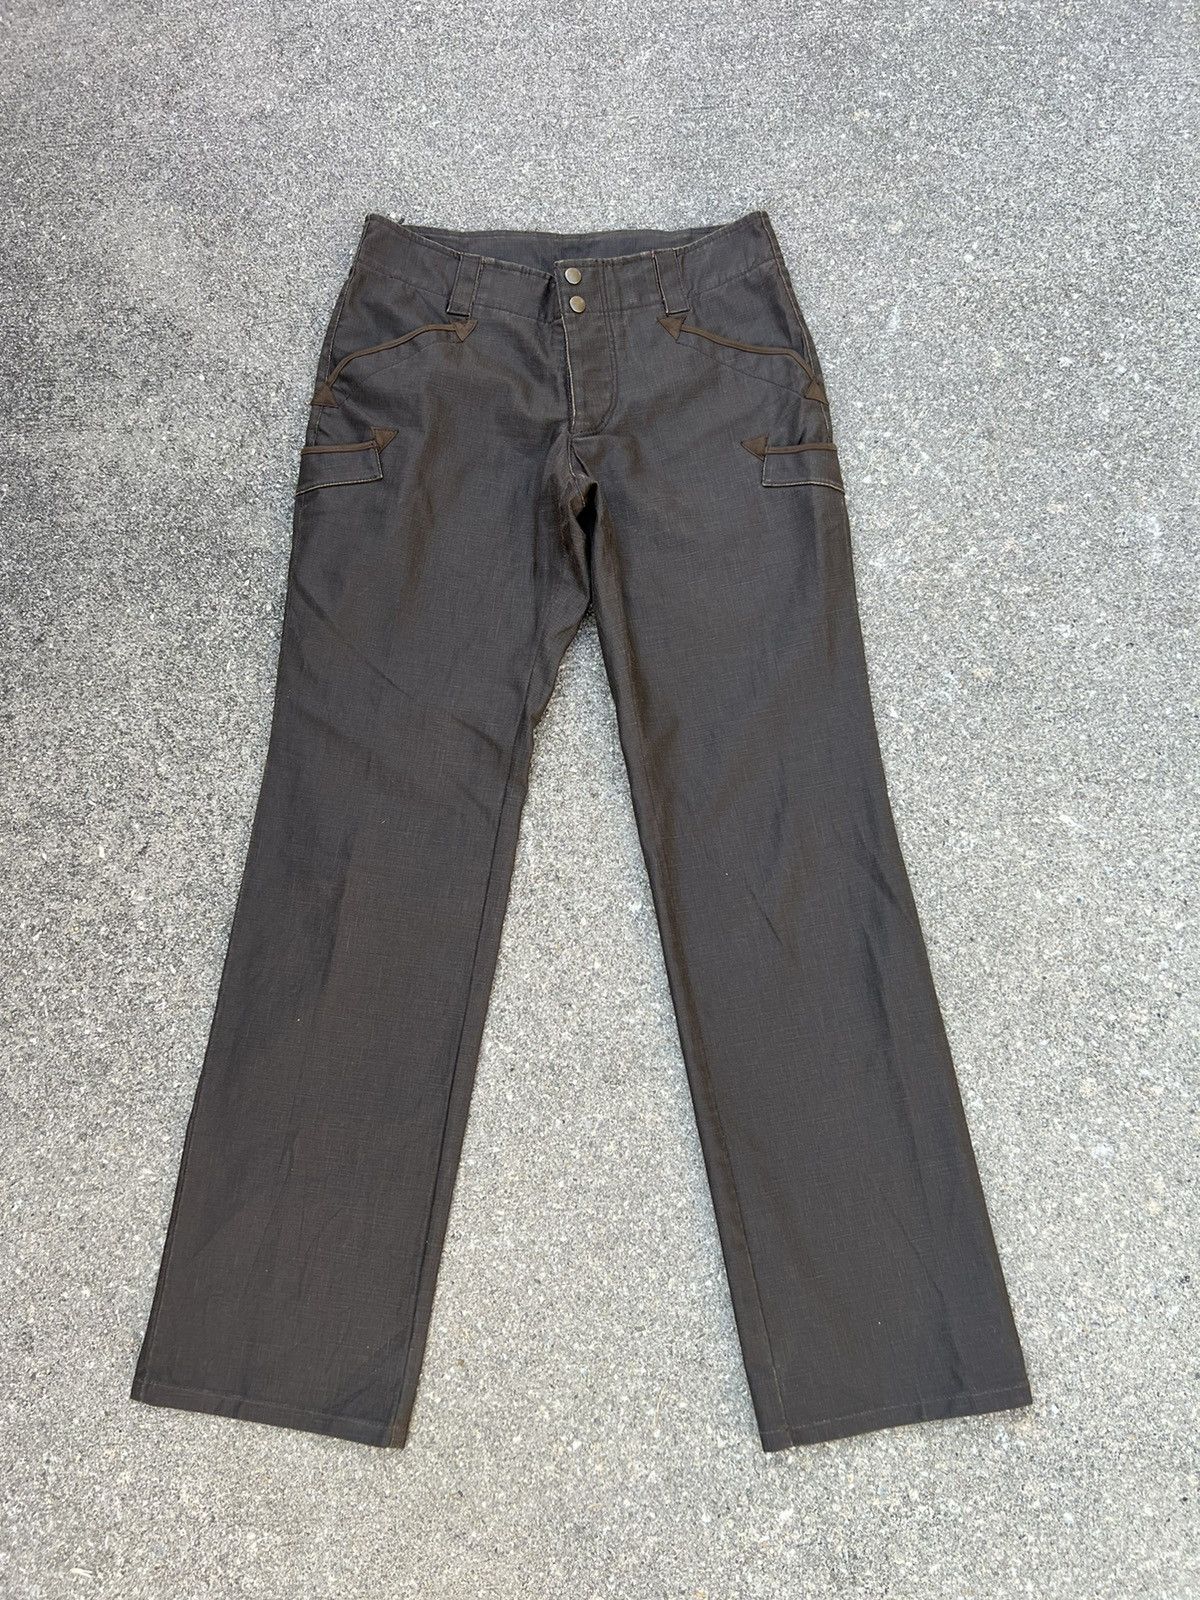 Matsuda Vintage MONSIEUR NICOLE Japan Waxed Westerner Pant Size US 30 / EU 46 - 1 Preview